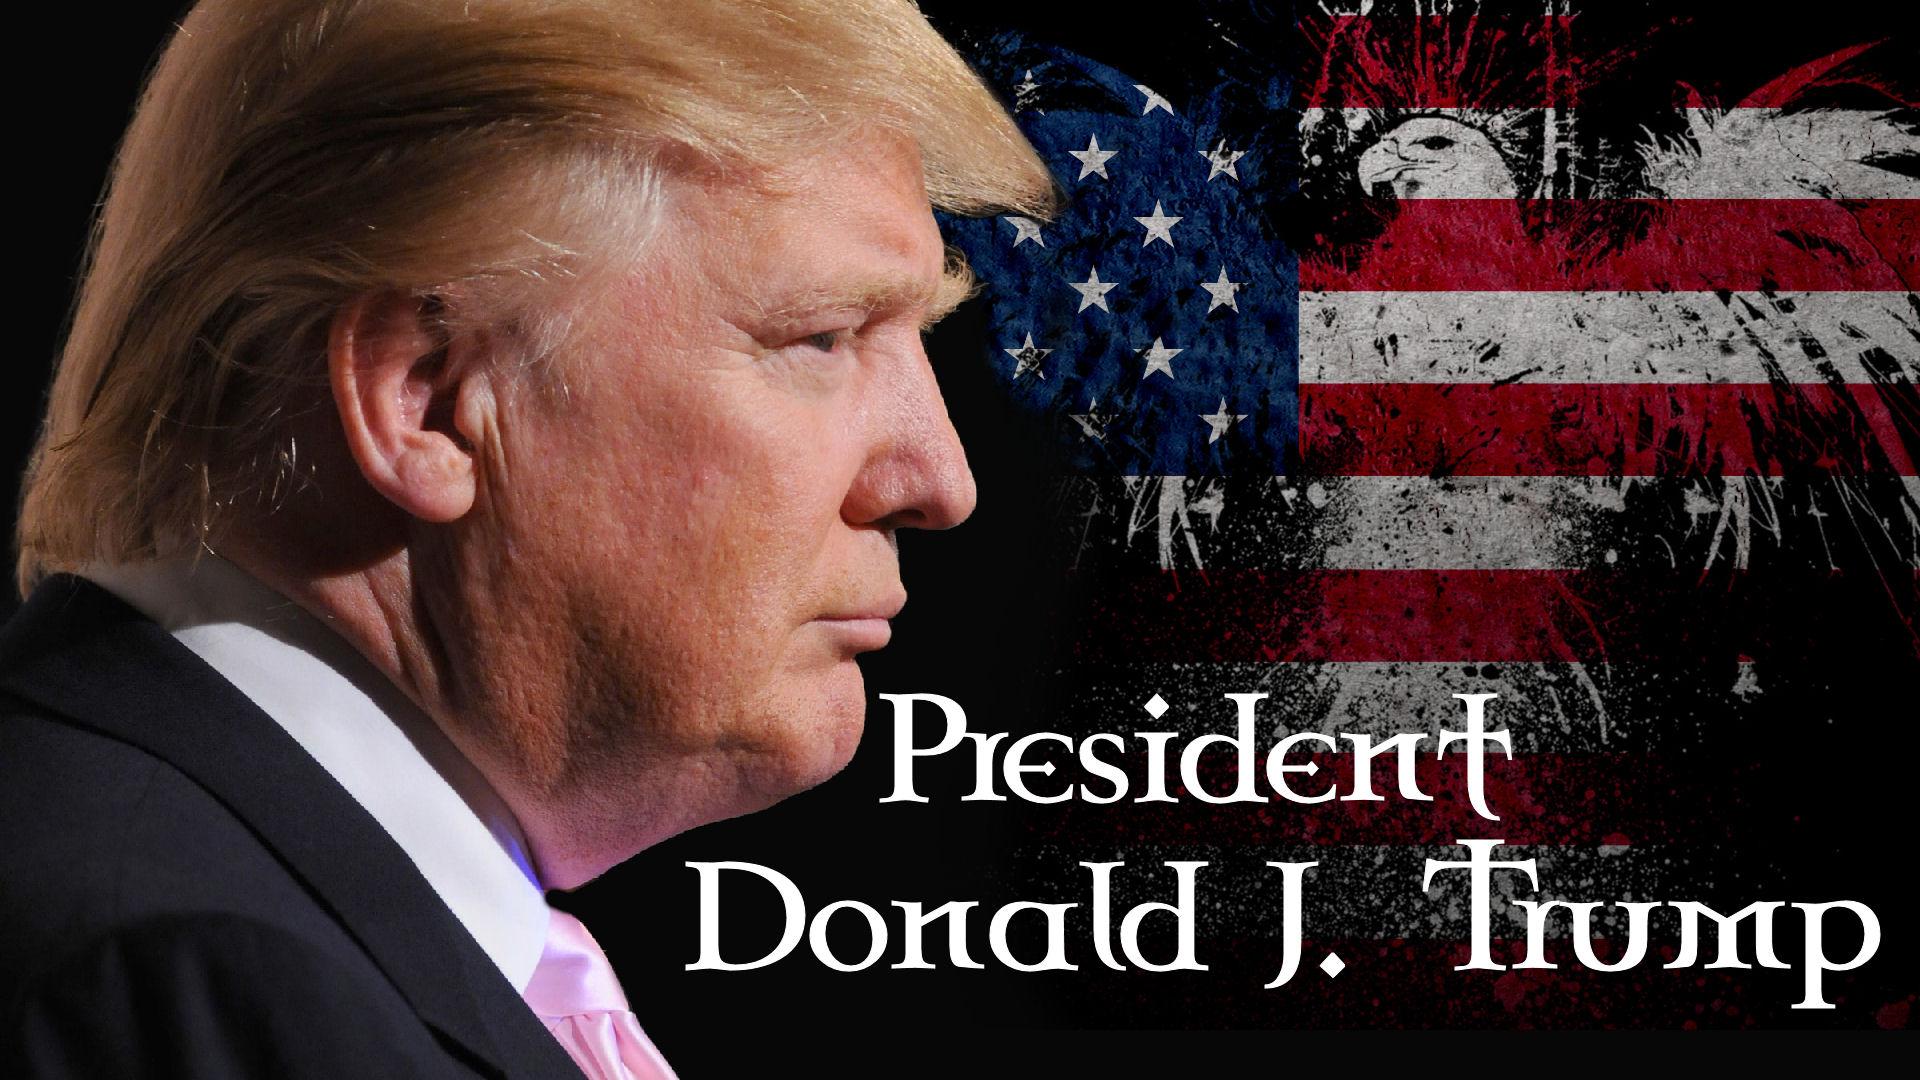 President Donald J.Trump Trump wallpaper 40539991